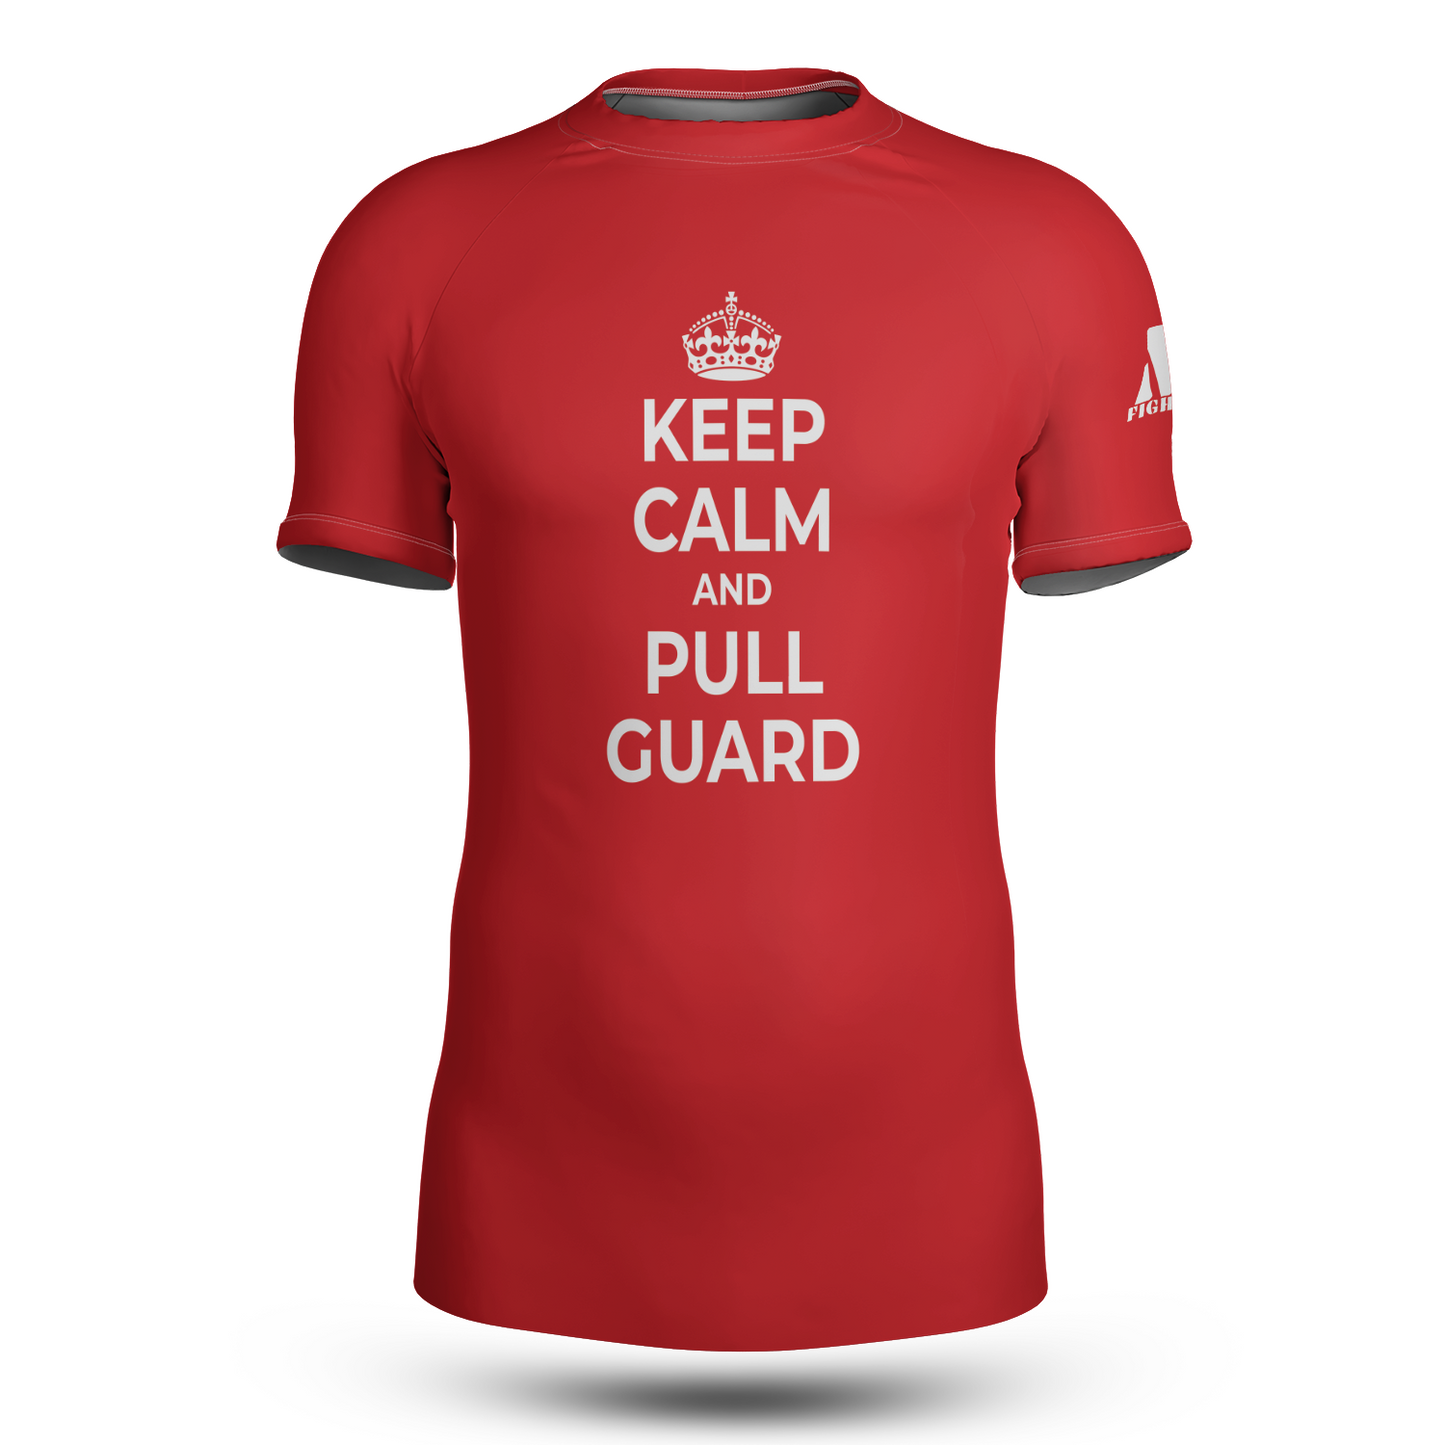 keep calm and pull guard rash guard